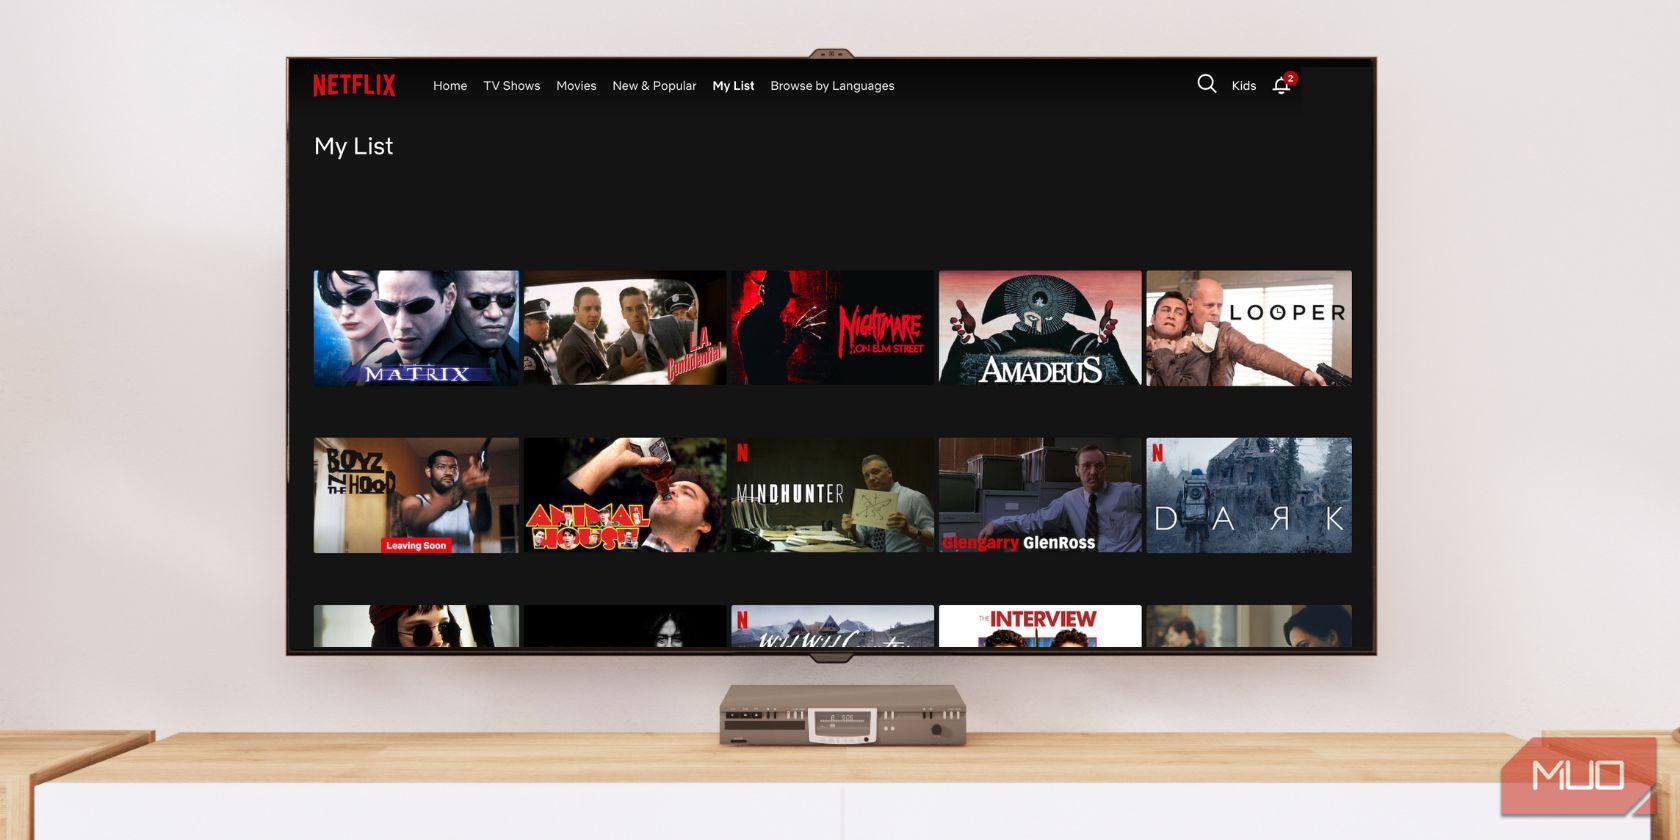 Netflix watchlist on smart TV.